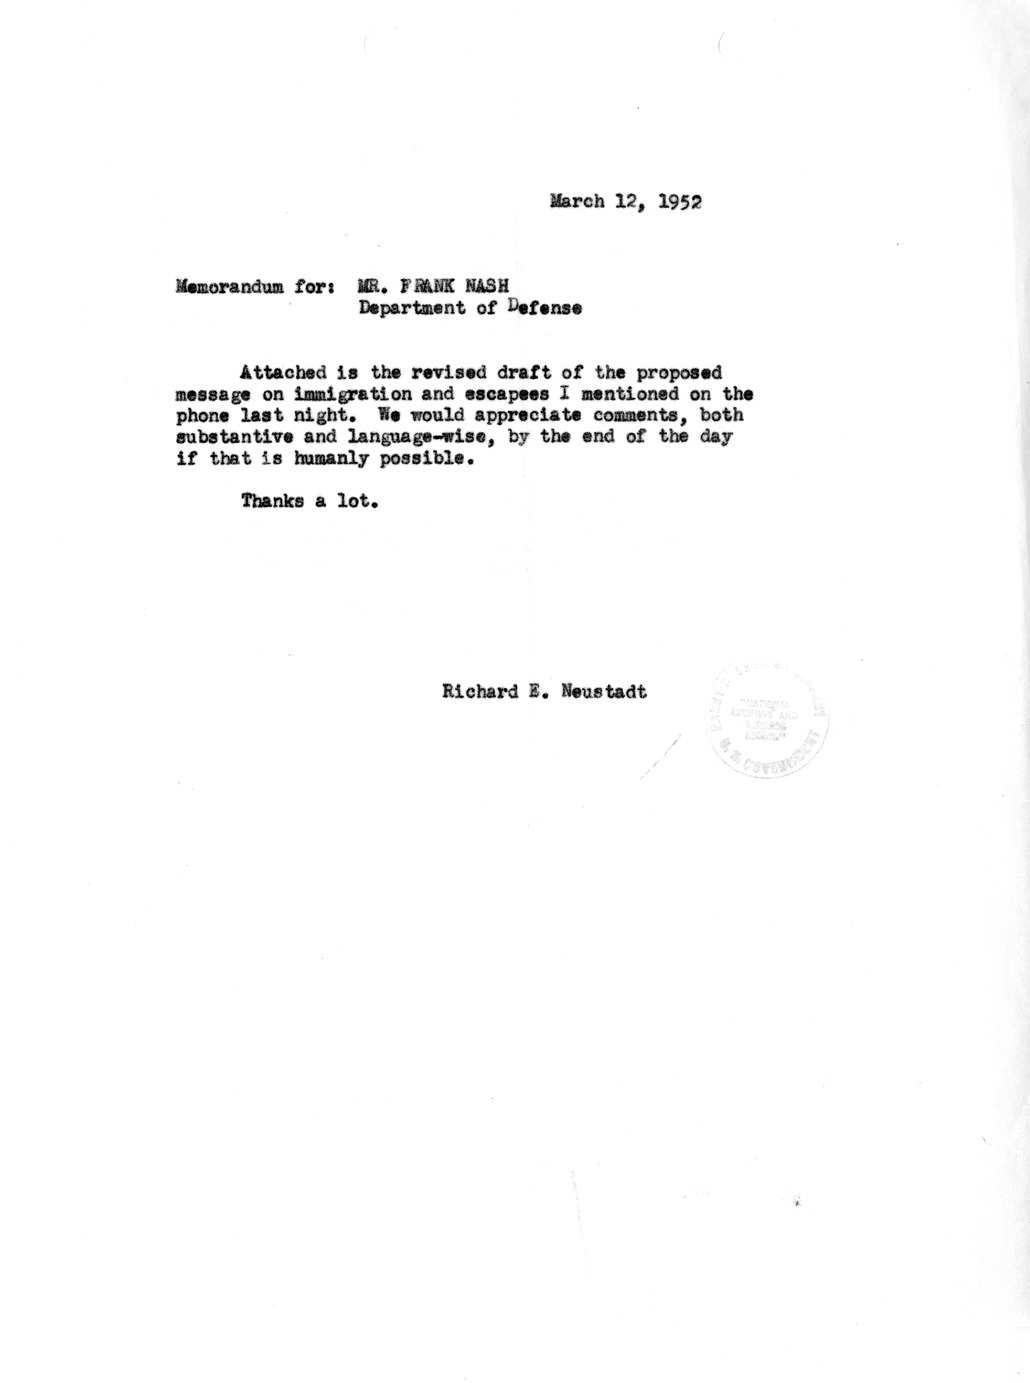 Memorandum from Richard Neustadt to Frank Nash